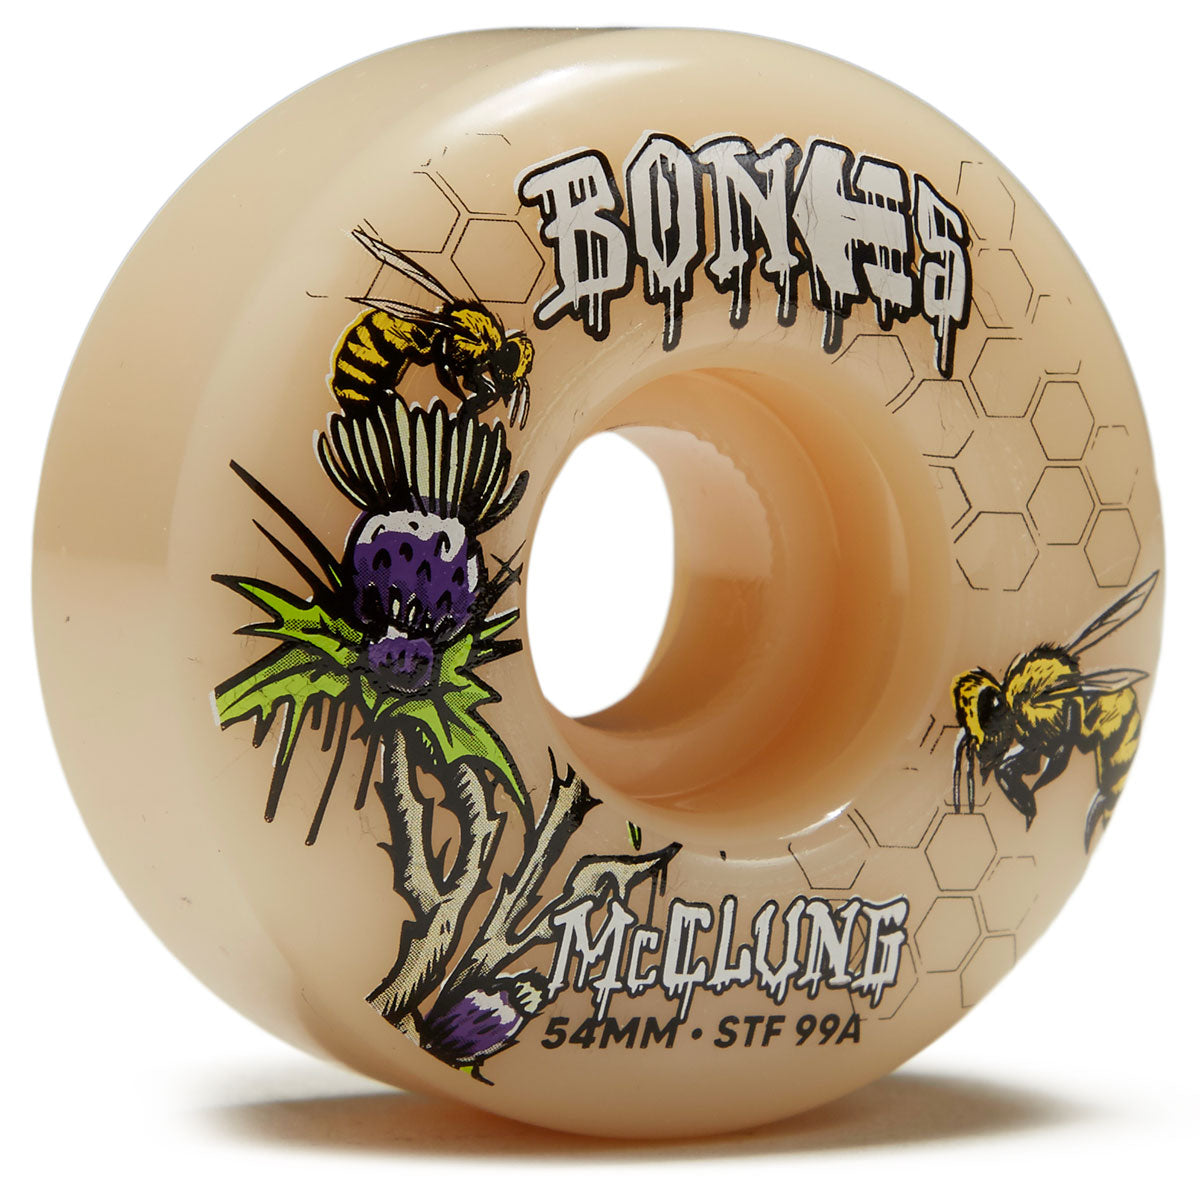 Bones x Etnies Trevor McClung 99A V5 Sidecut Skateboard Wheels - 54mm image 1